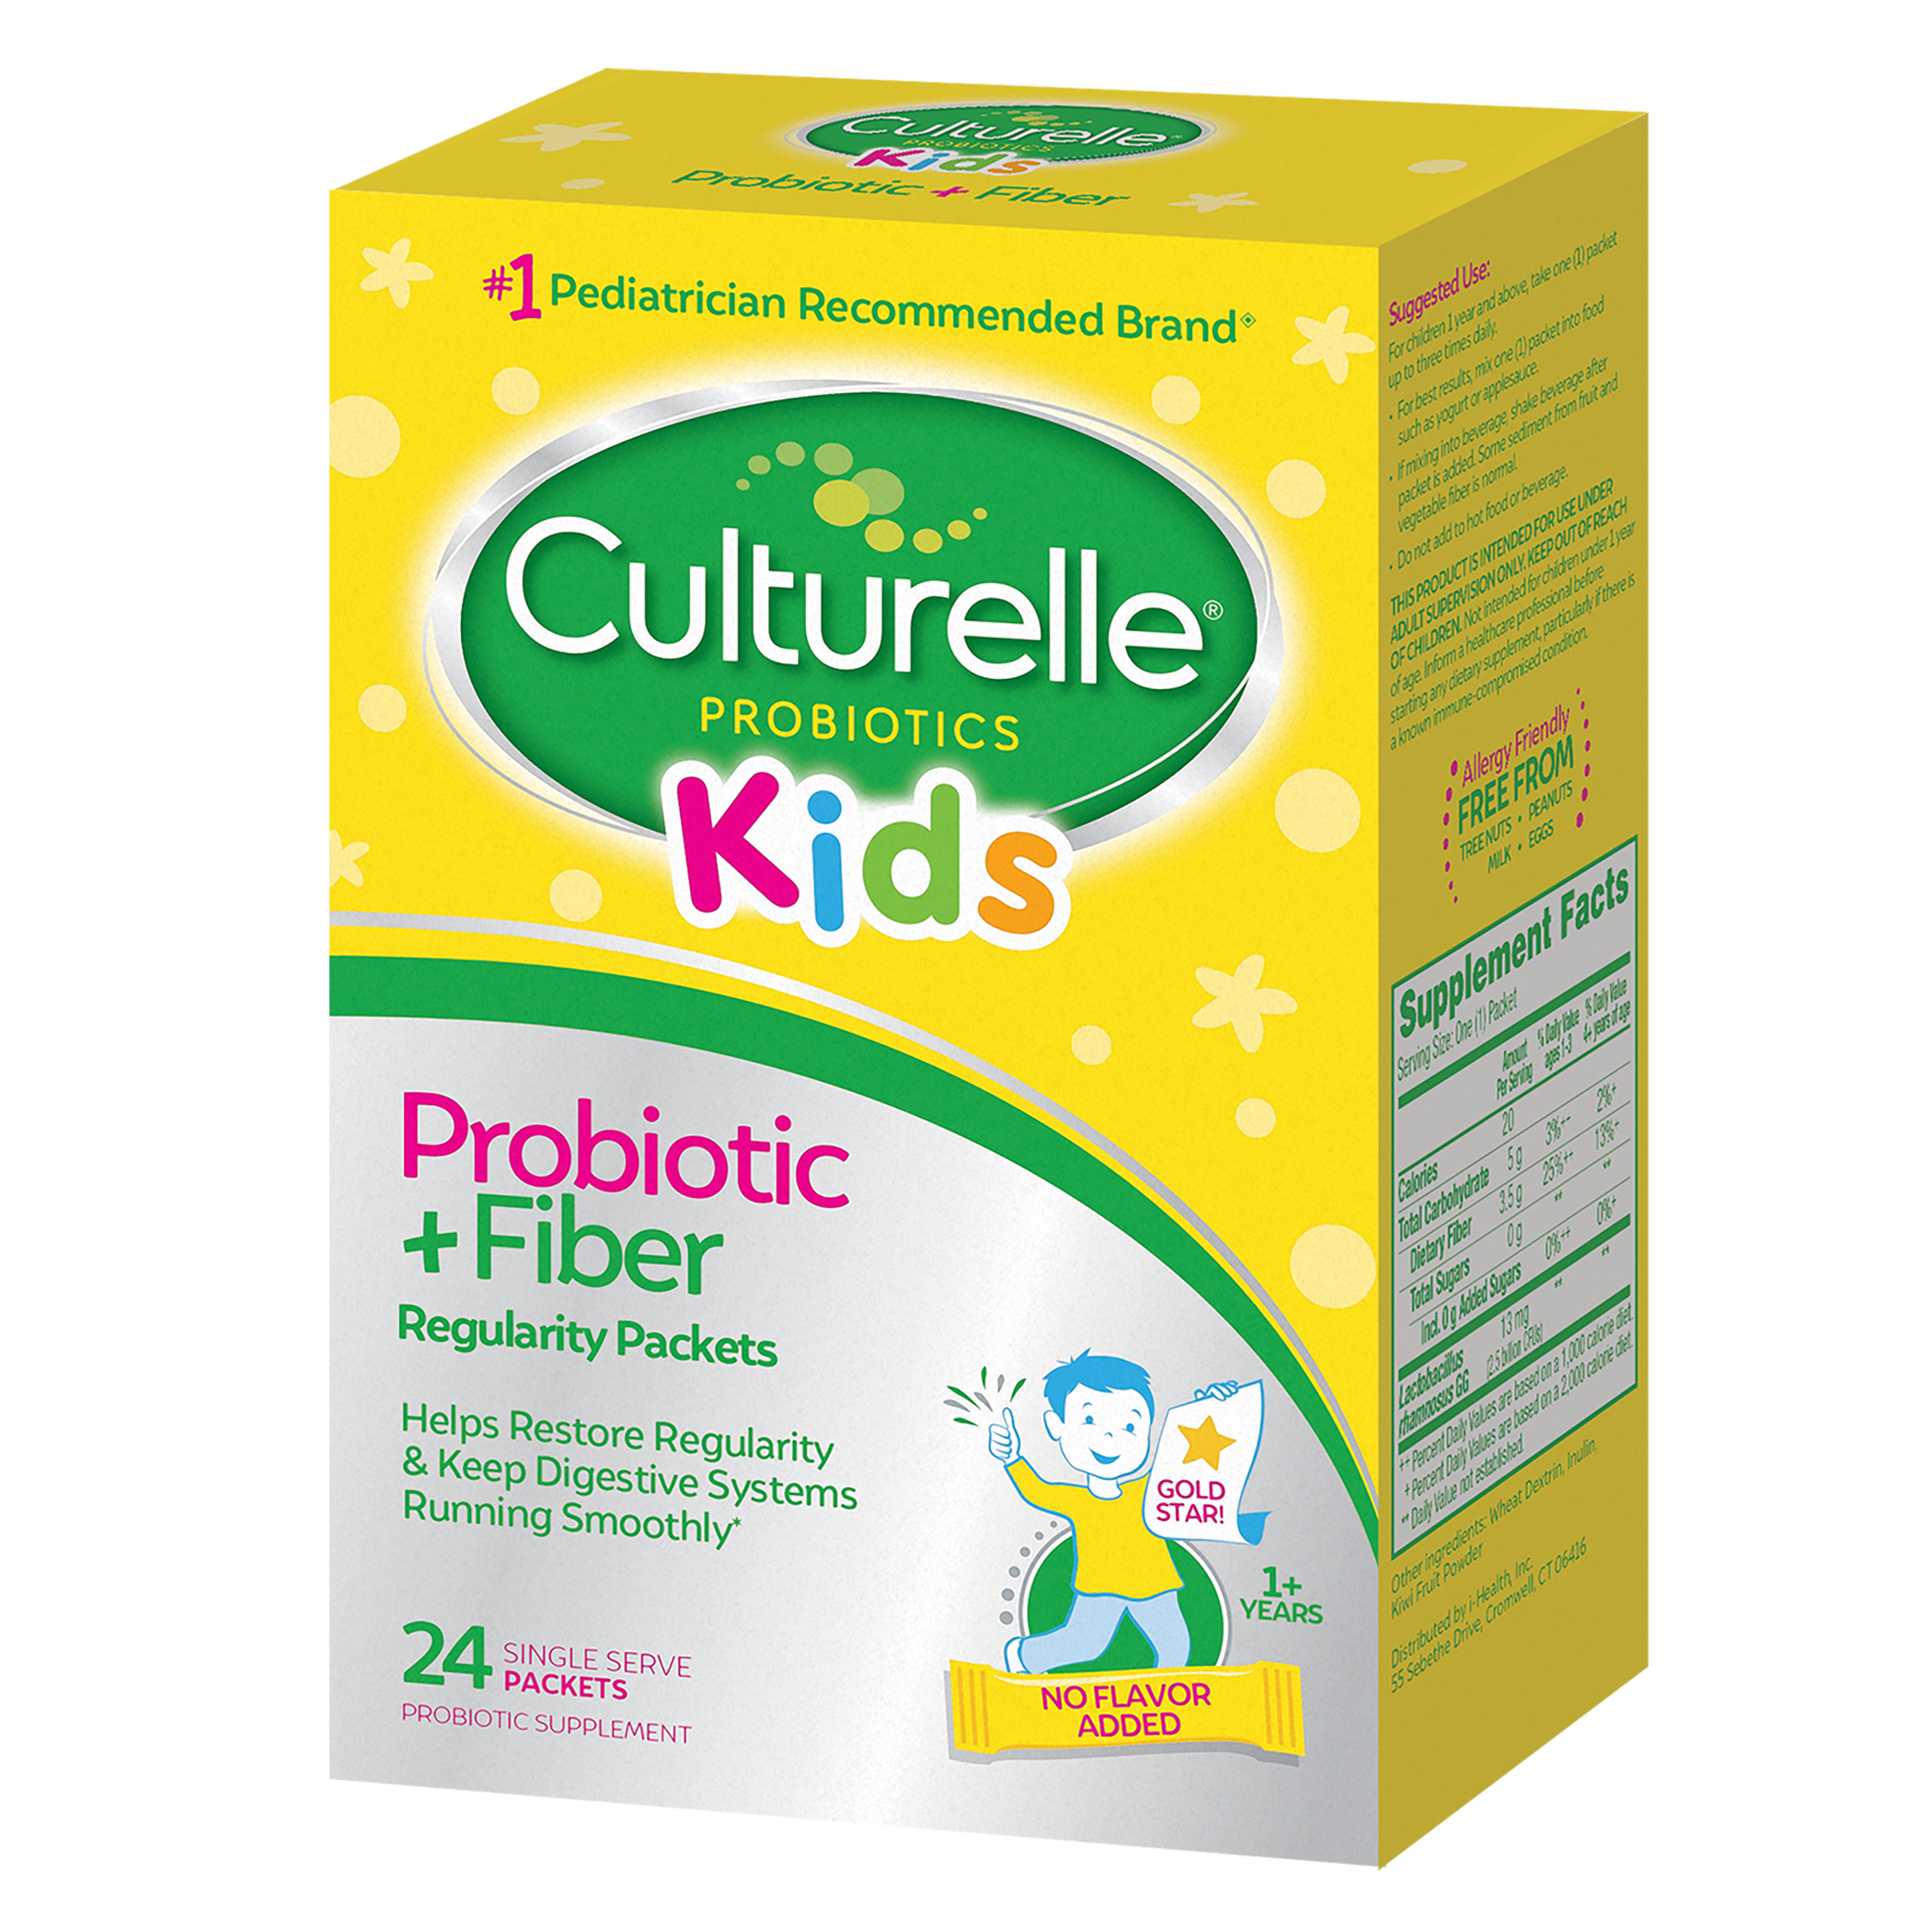 Culturelle Kids Probiotic + Fiber Packets, Helps Restore Regularity, 24 ct